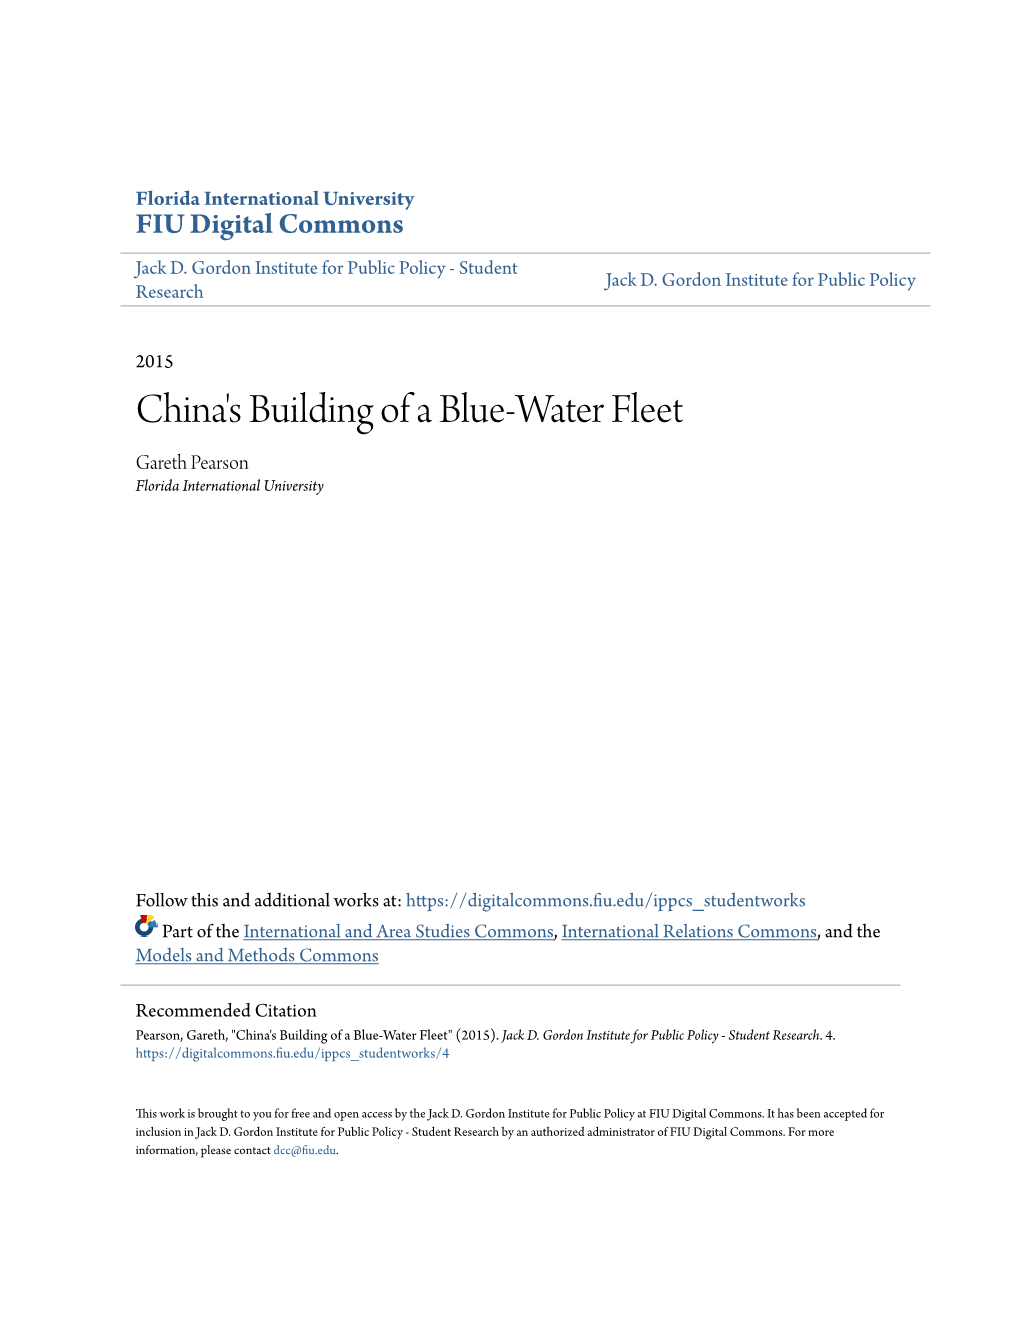 China's Building of a Blue-Water Fleet Gareth Pearson Florida International University